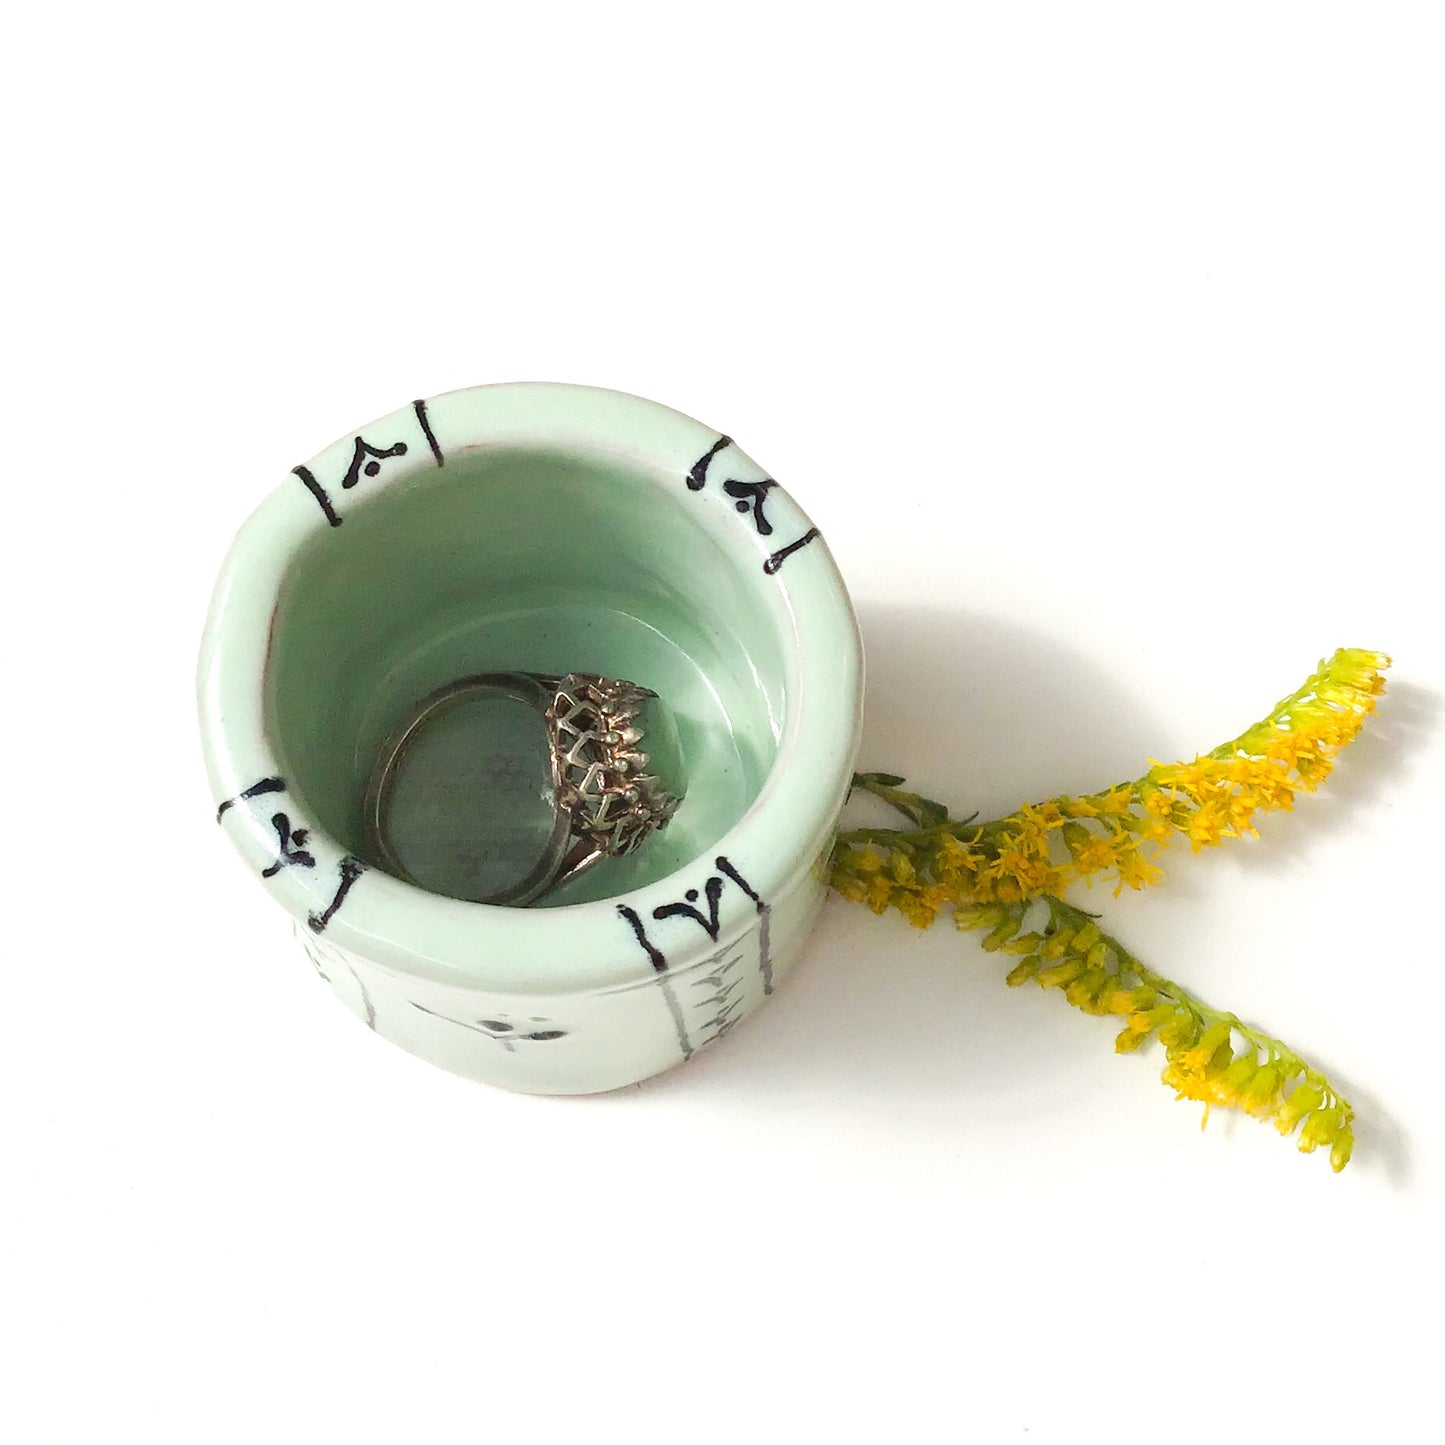 Aqua Ring Bowl with Black Floral Print - Small Ceramic Ring Bowl